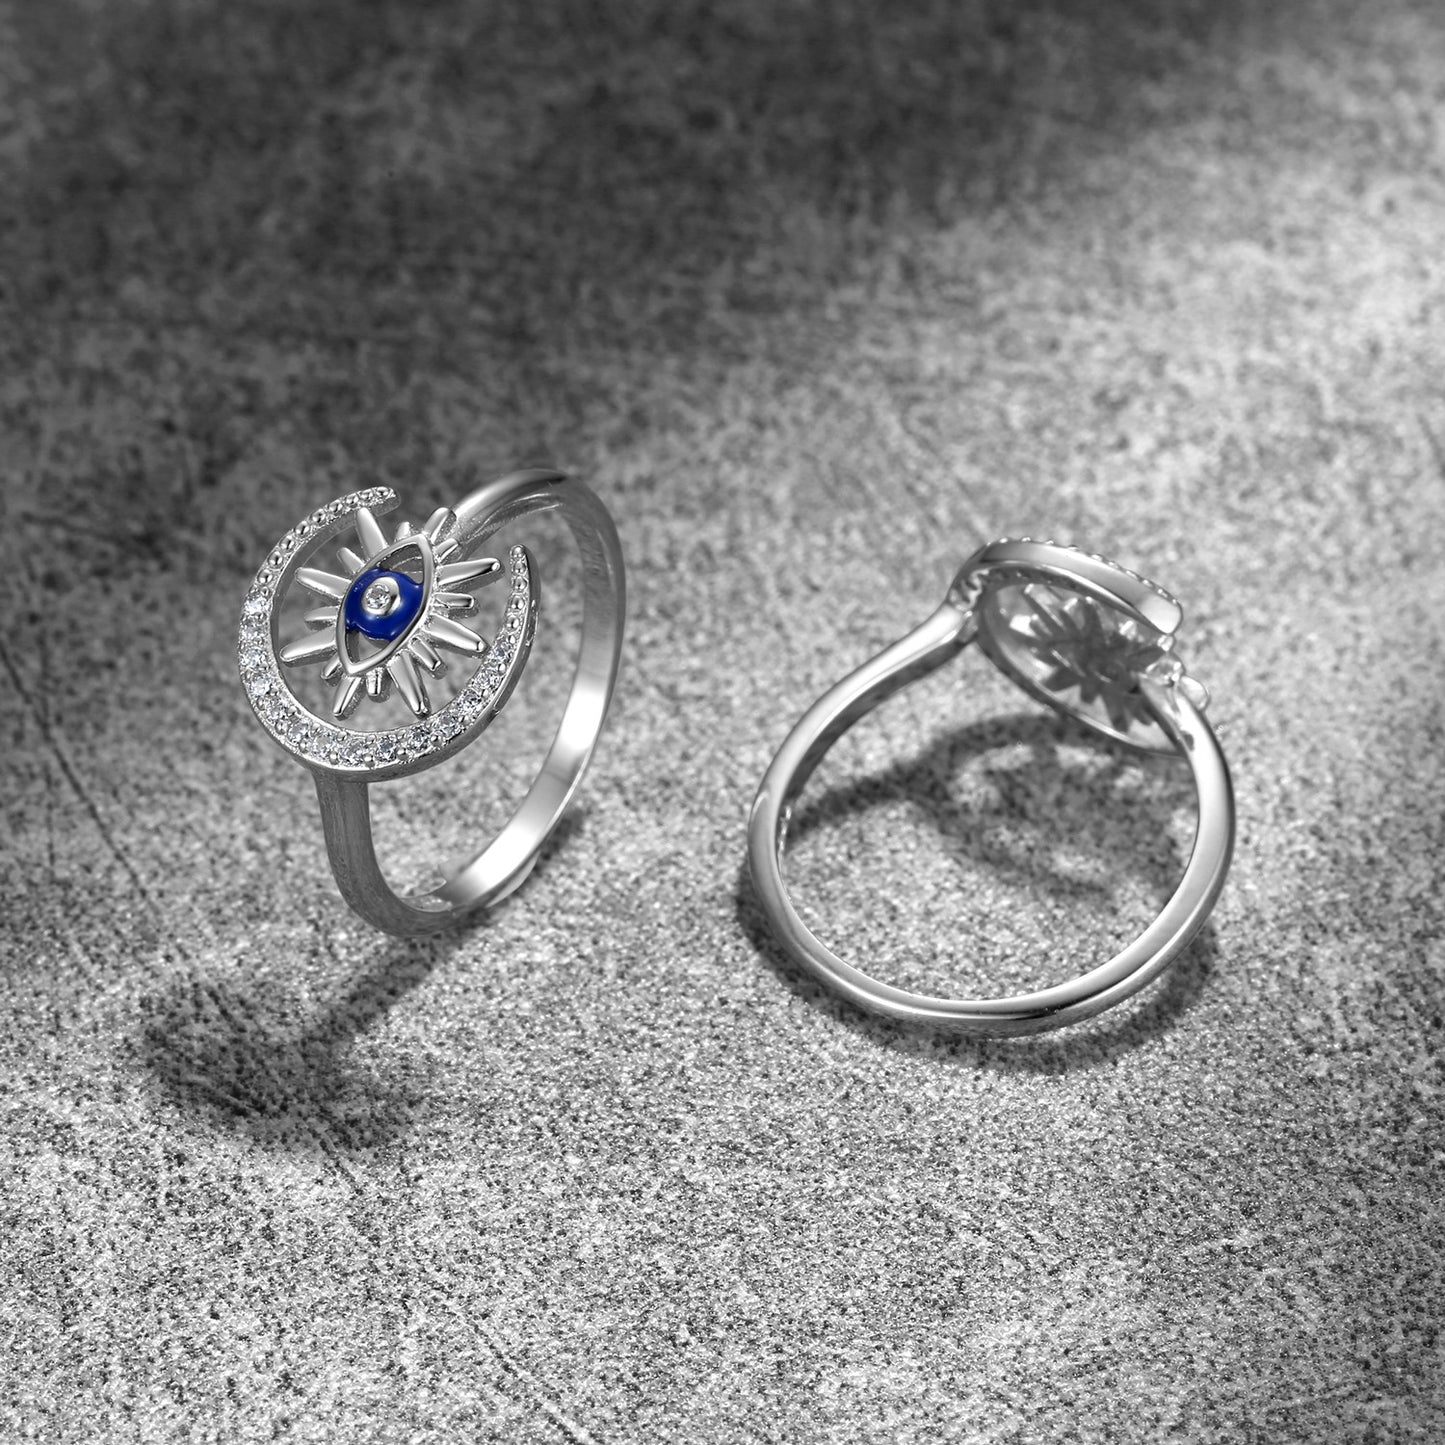 Blue Devil's Eye Star Moon Zircon Opening Sterling Silver Ring